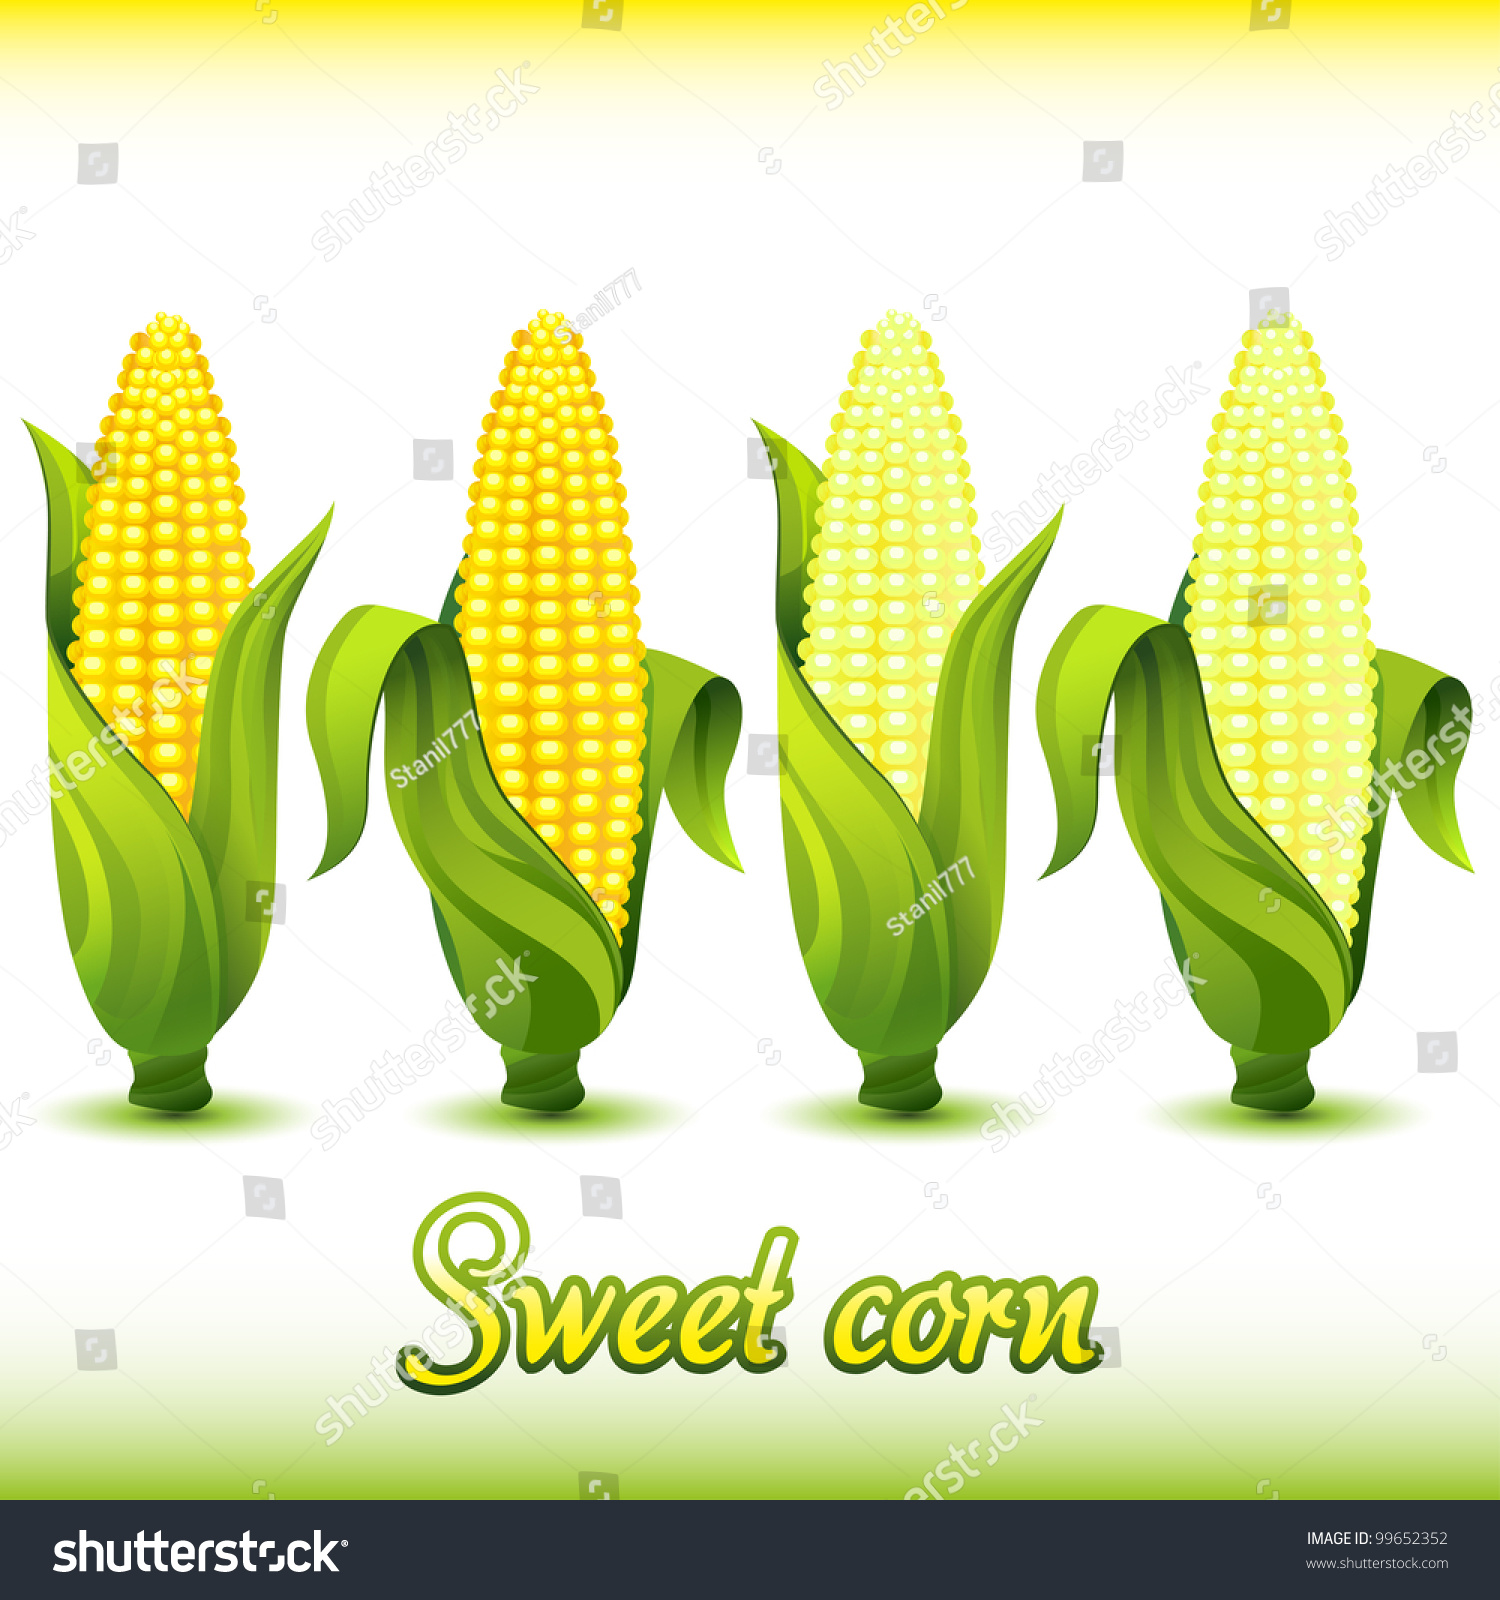 Download Corn Sweet Set Stock Vector Illustration 99652352 ...